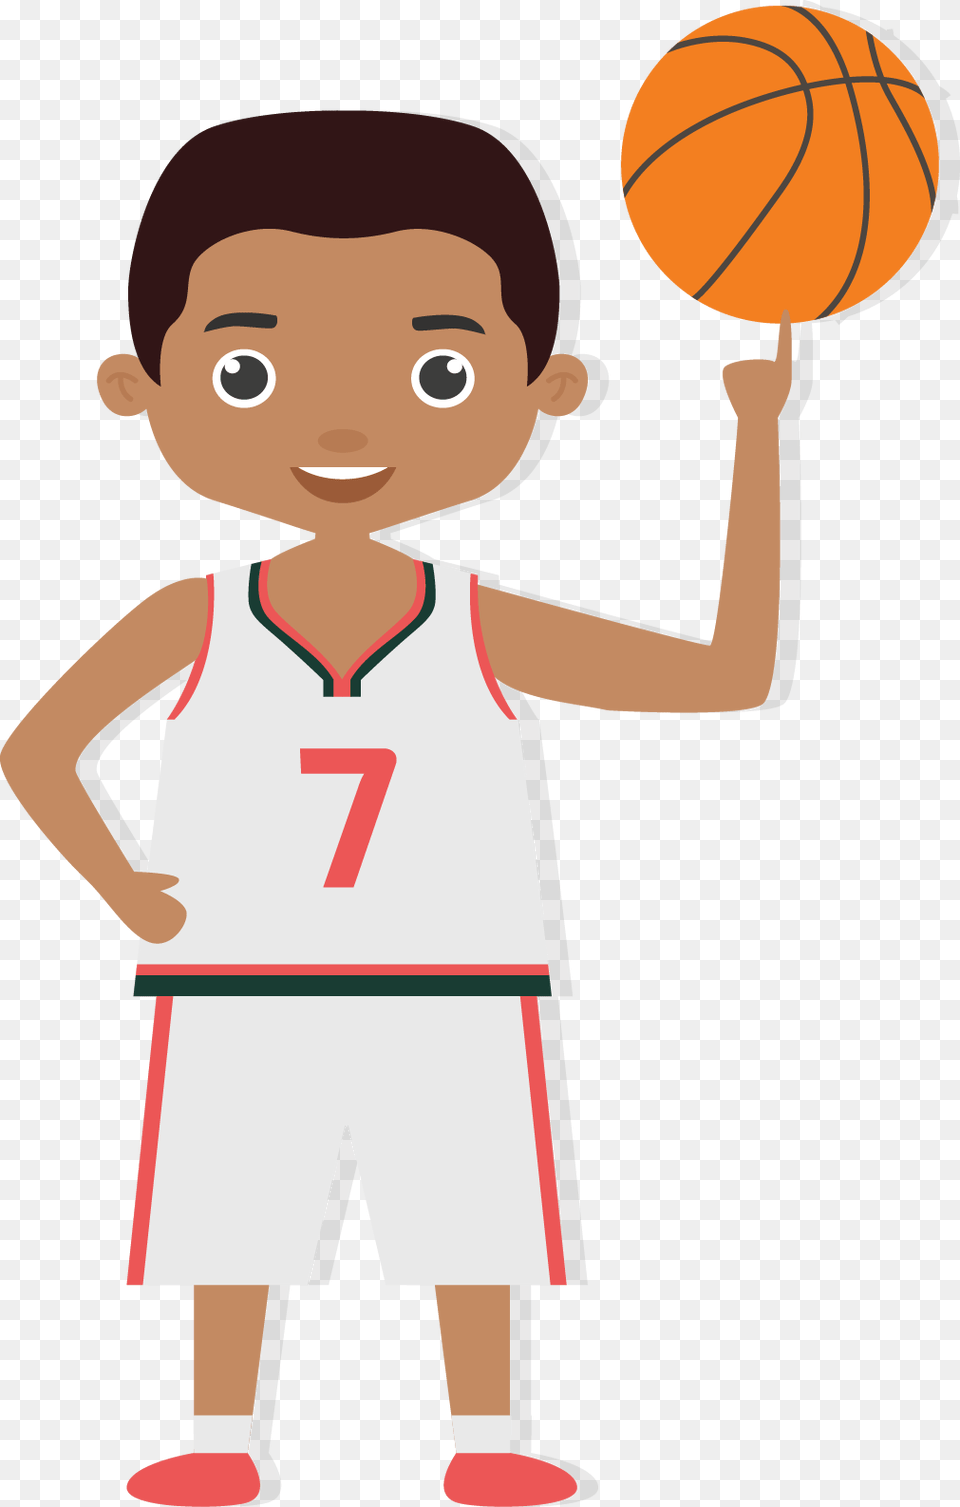 Dribbling Basketball Player Cartoon, Ball, Basketball (ball), Sport, Baby Png Image